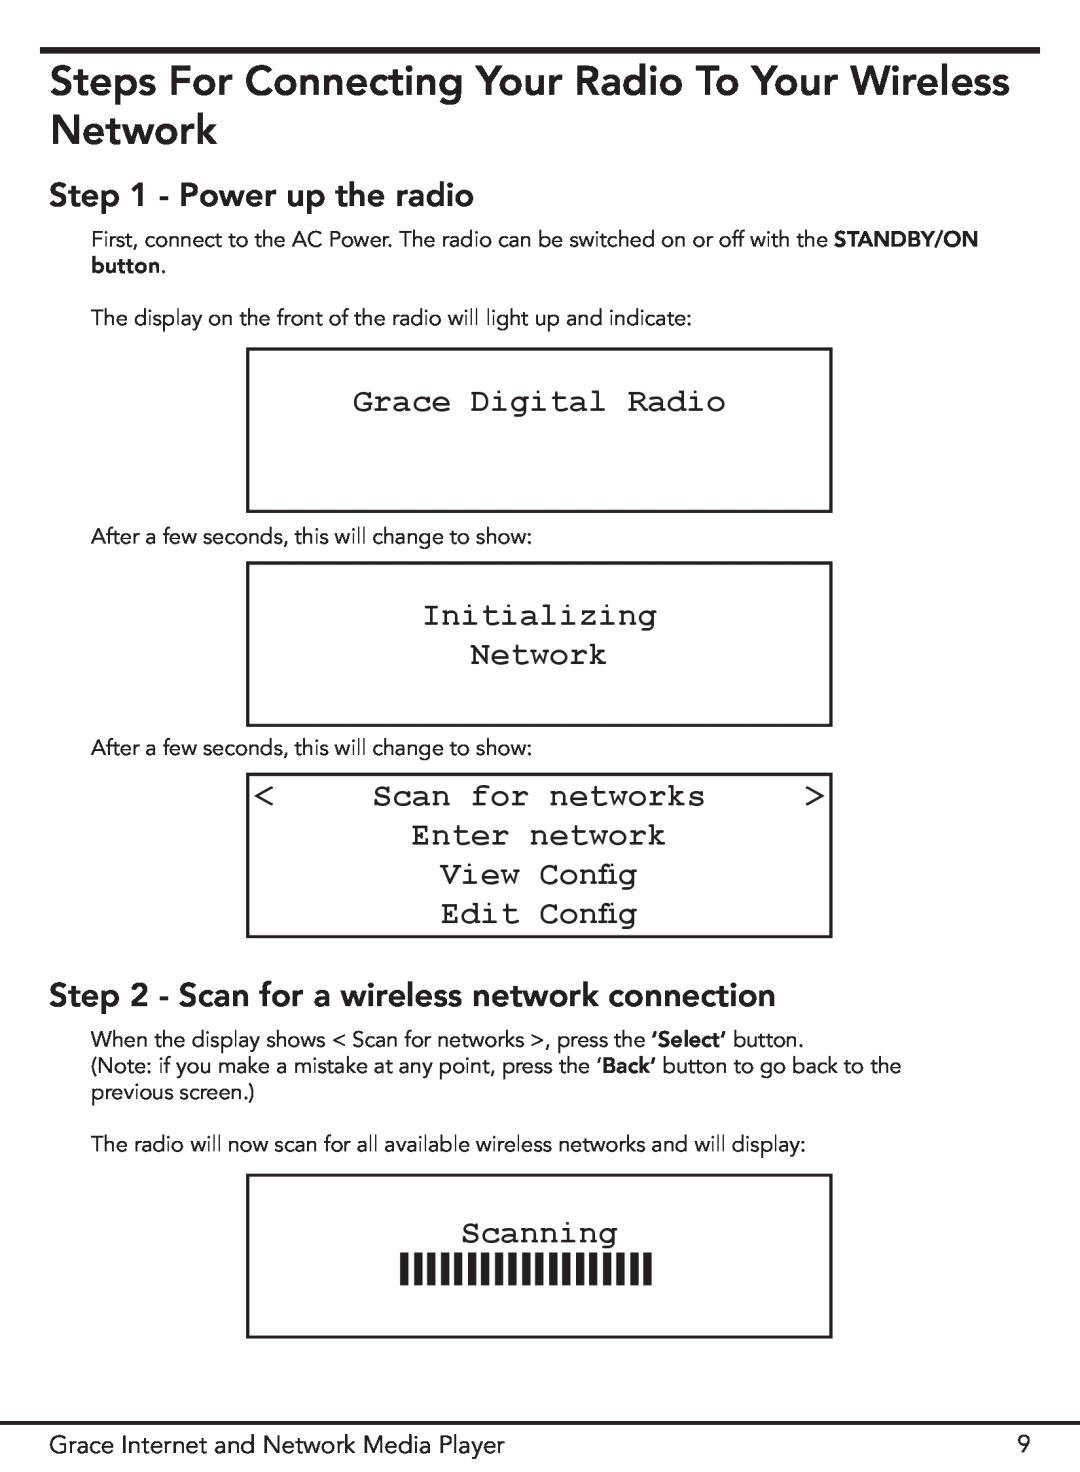 Grace GDI-IR3000 manual Power up the radio, Grace Digital Radio, Initializing, View, Config, Edit, Scanning, Network 